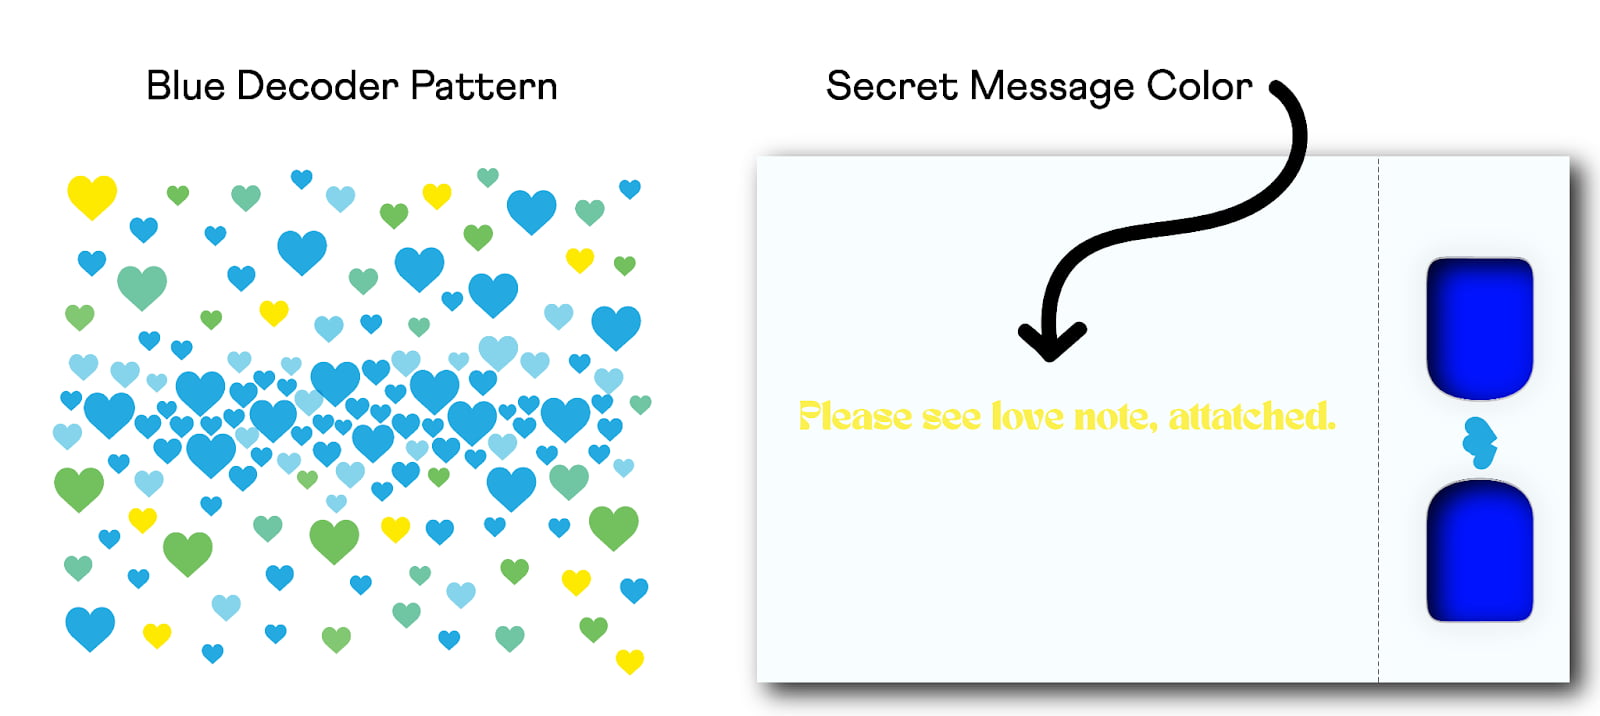 Blue decoder pattern with secret message